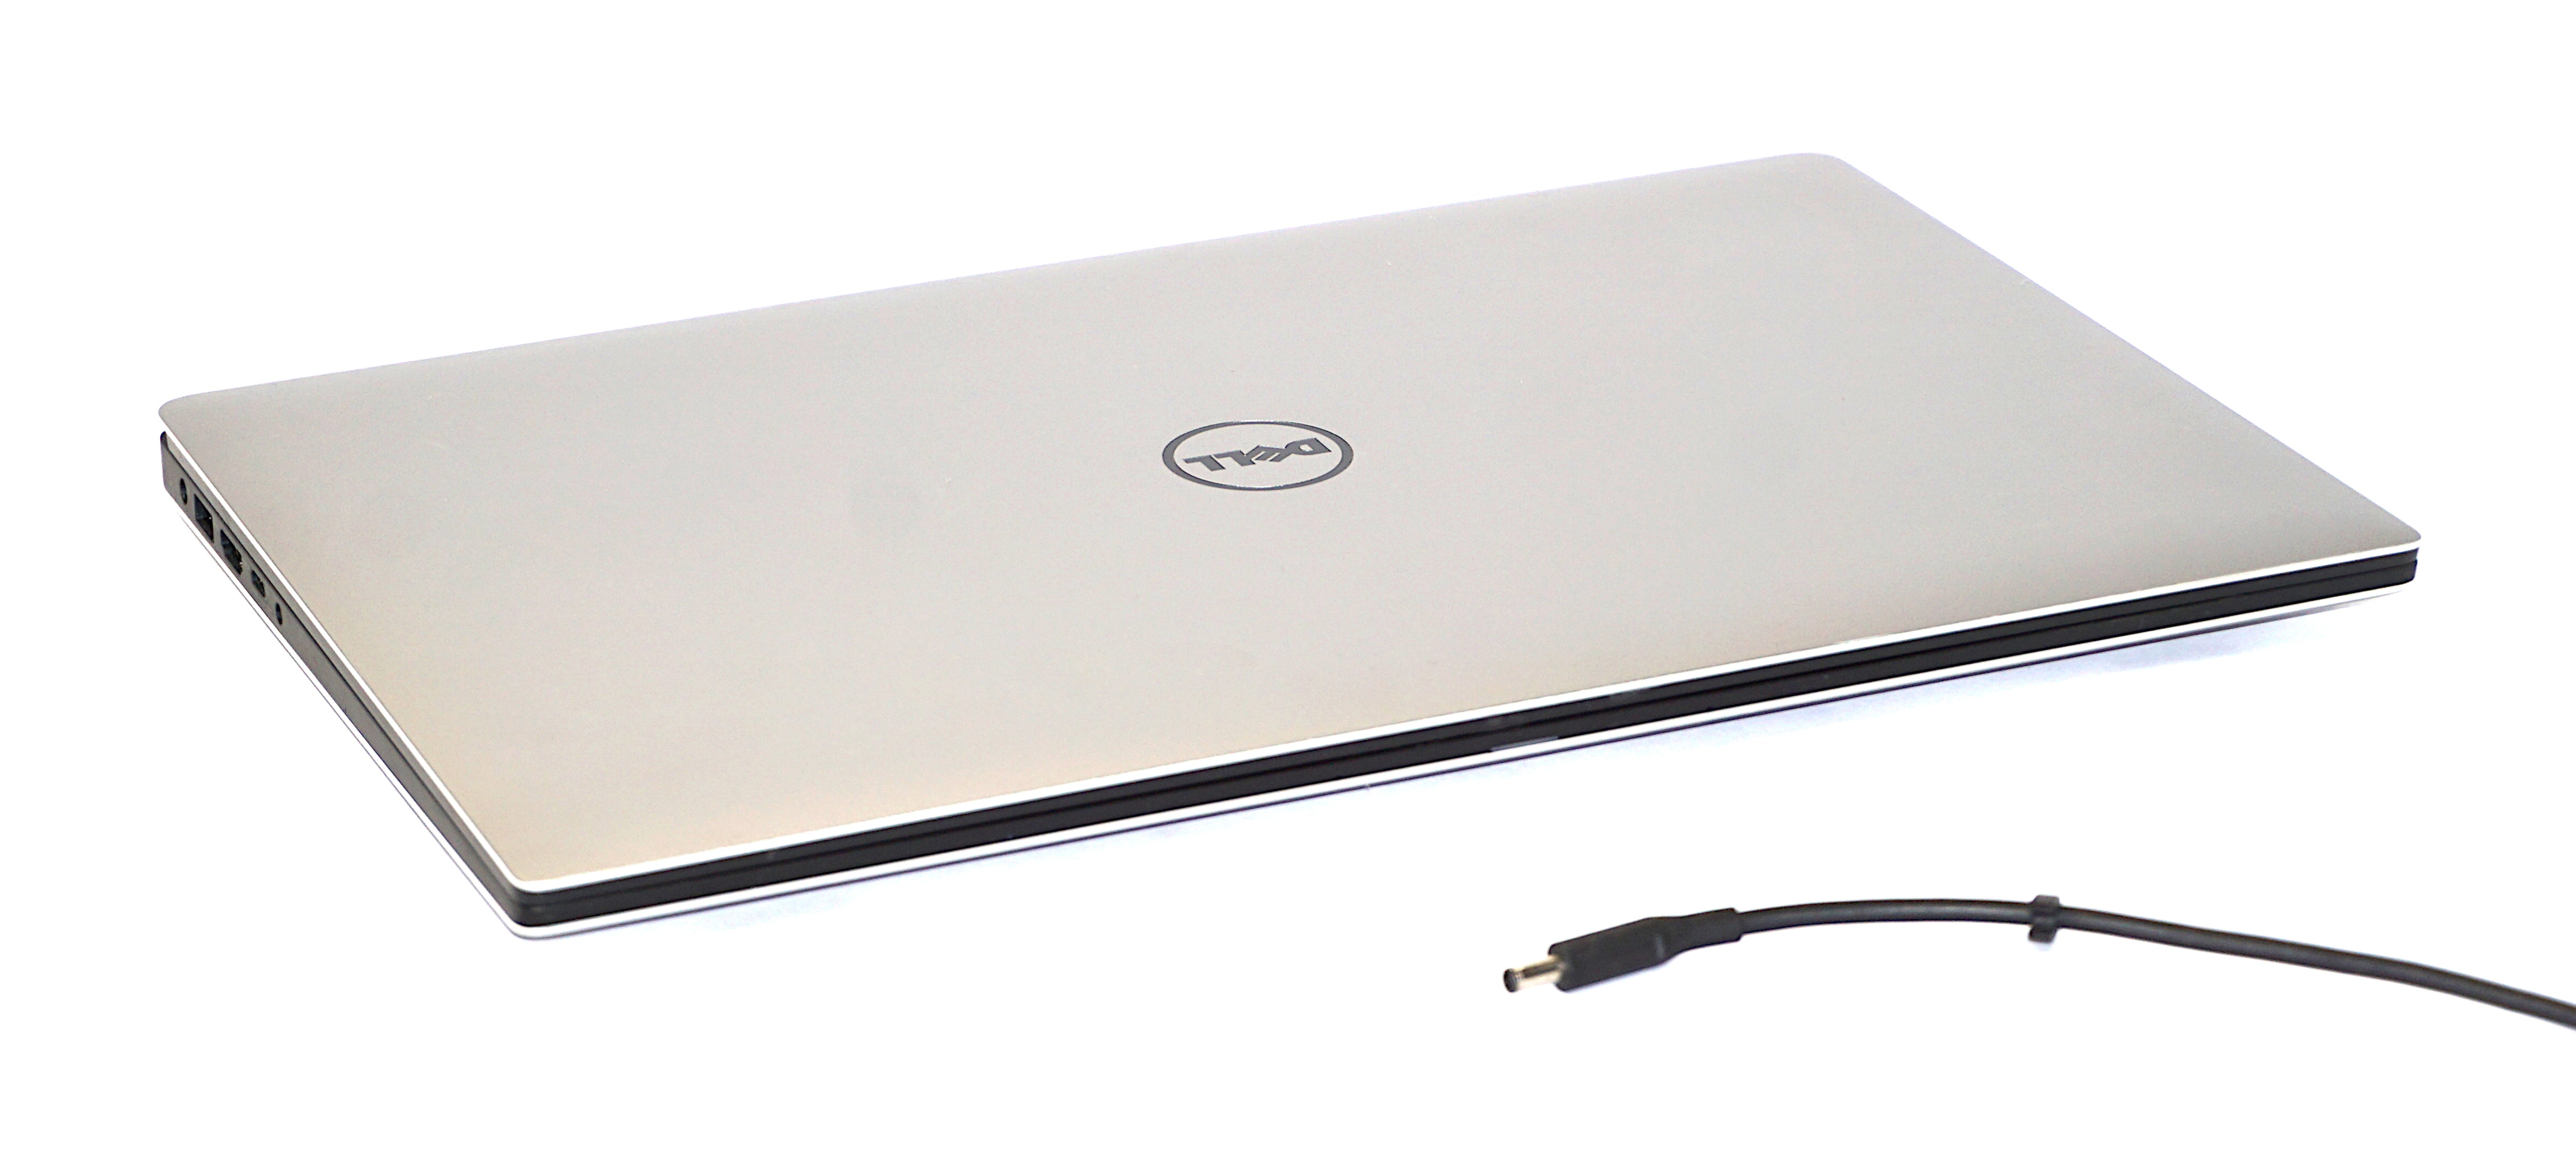 Dell Precision 5520 Laptop, 15.6", Intel Xeon, 32GB RAM, 512GB SSD